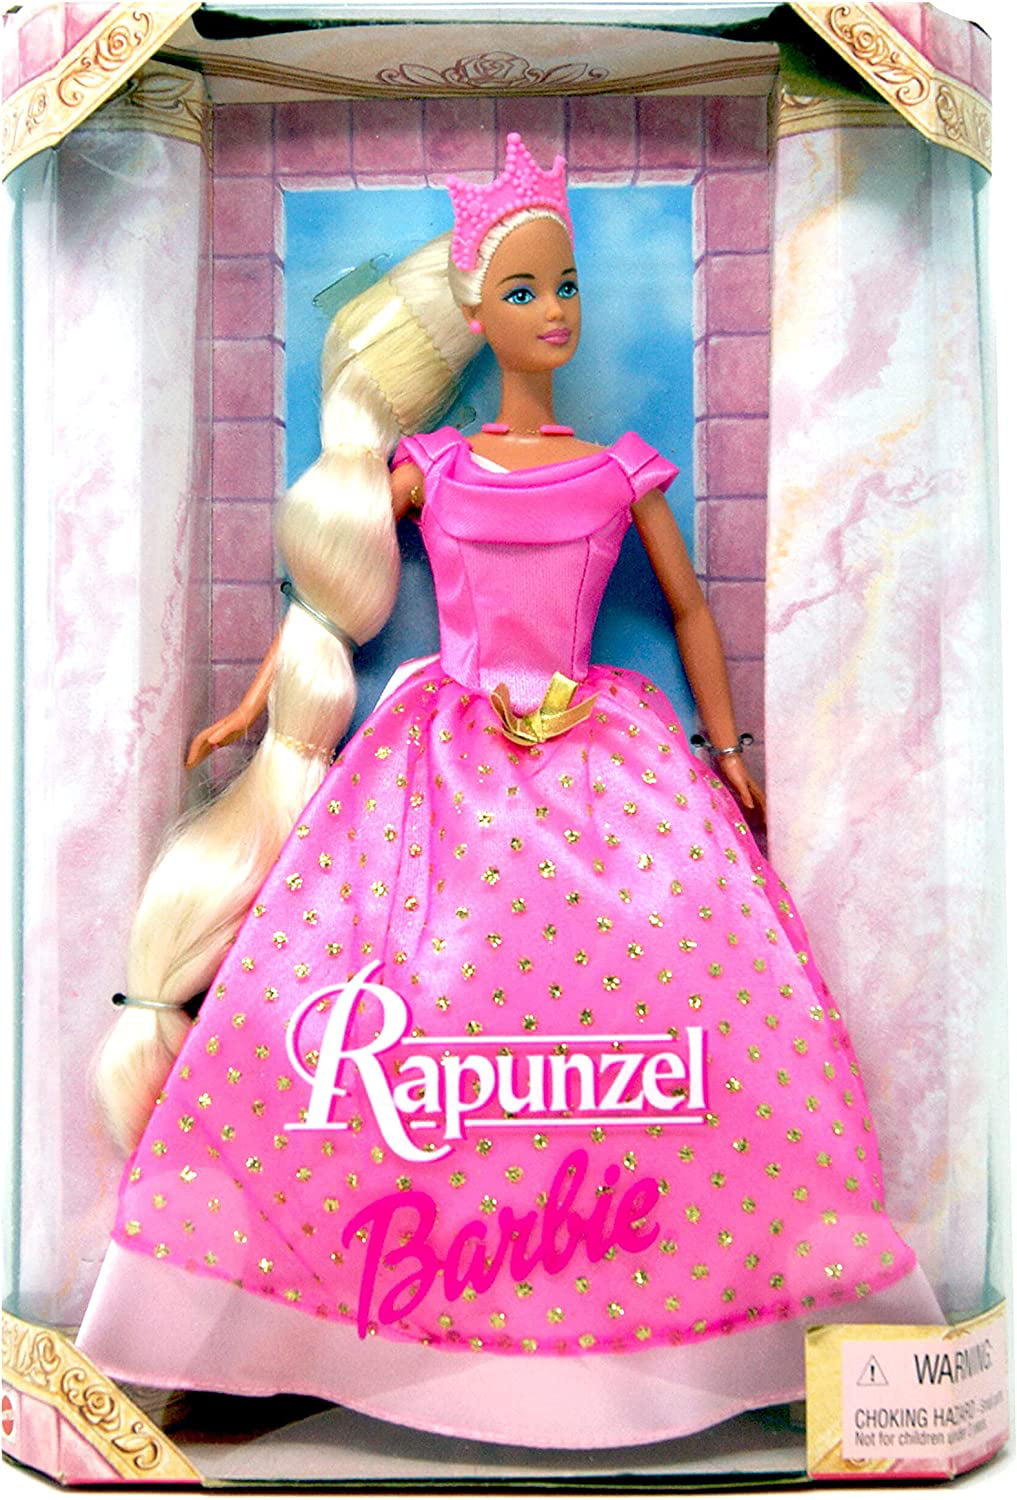 barbie as rapunzel